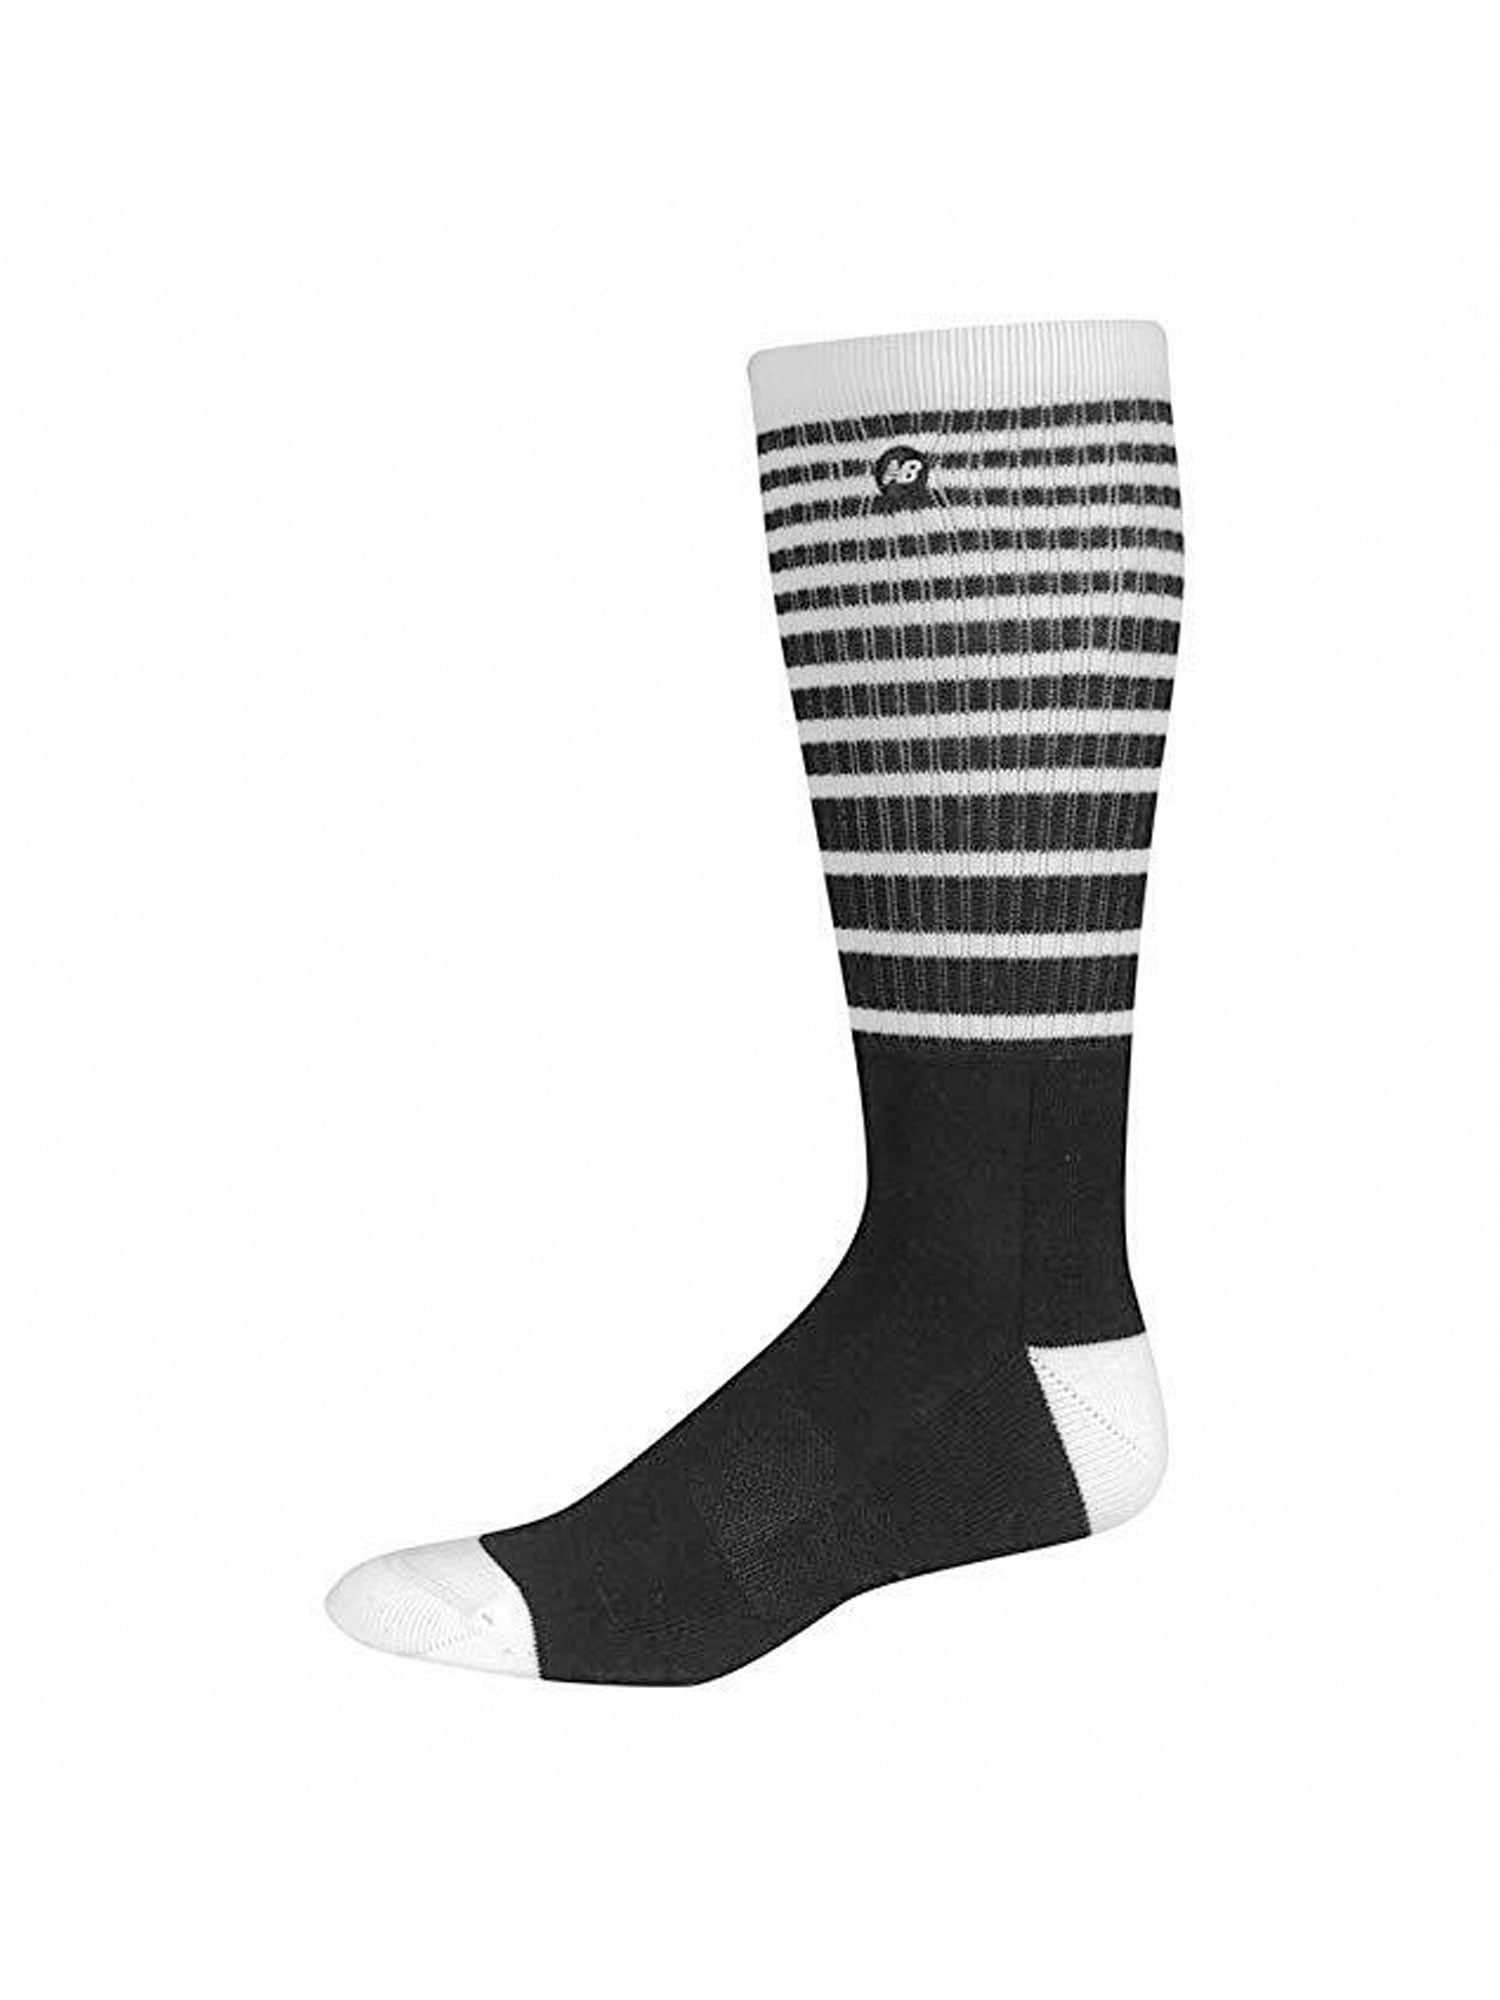 New Balance Lifestyle Stripe Men's Crew Socks N4701 - Walmart.com